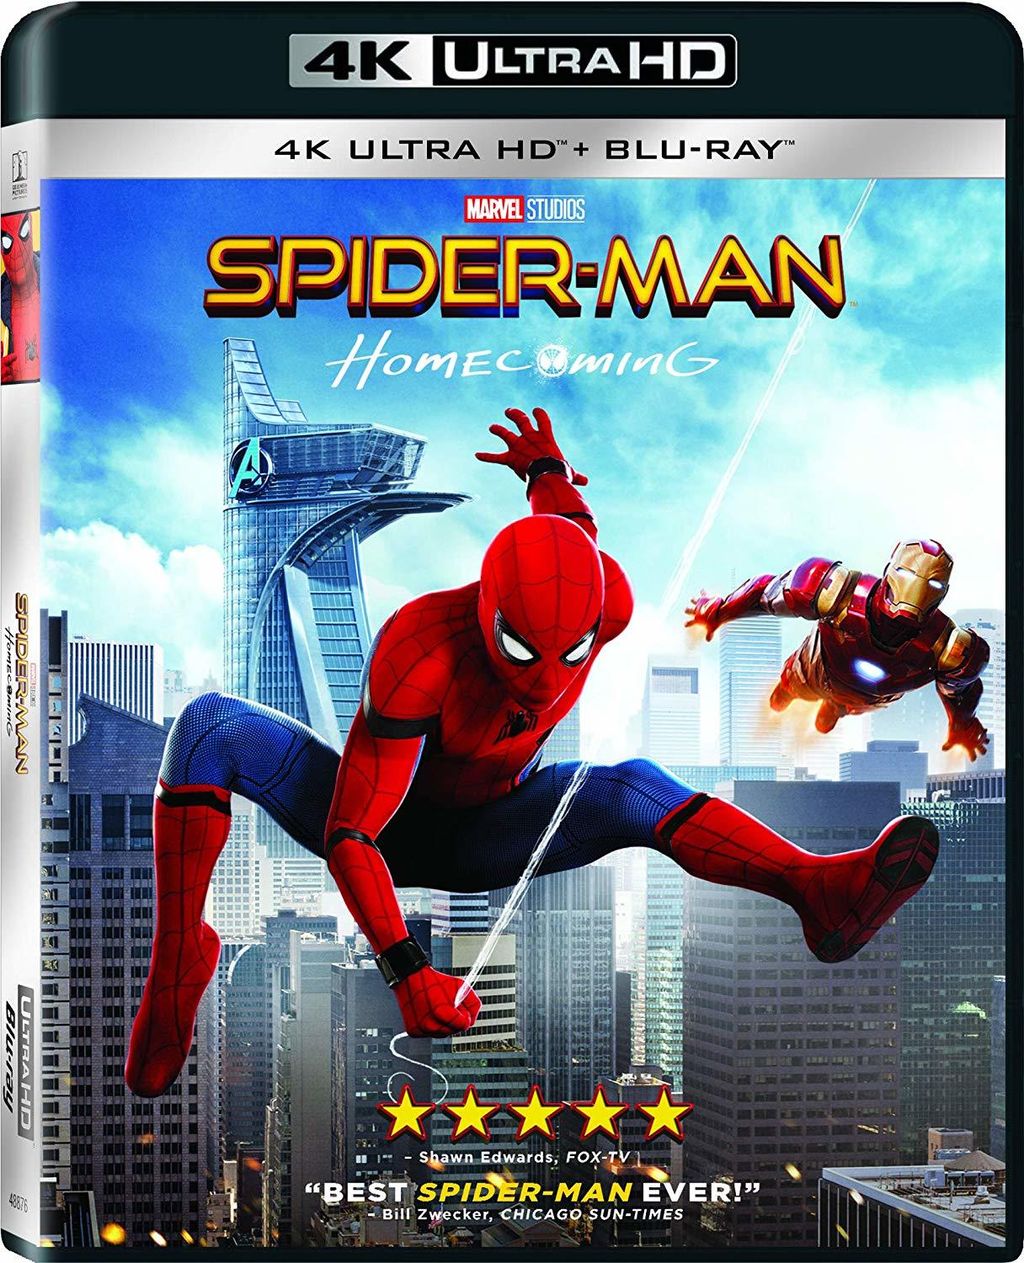 Spiderman Homecoming 4K Ultra HD Bluray Malaysia.jpg